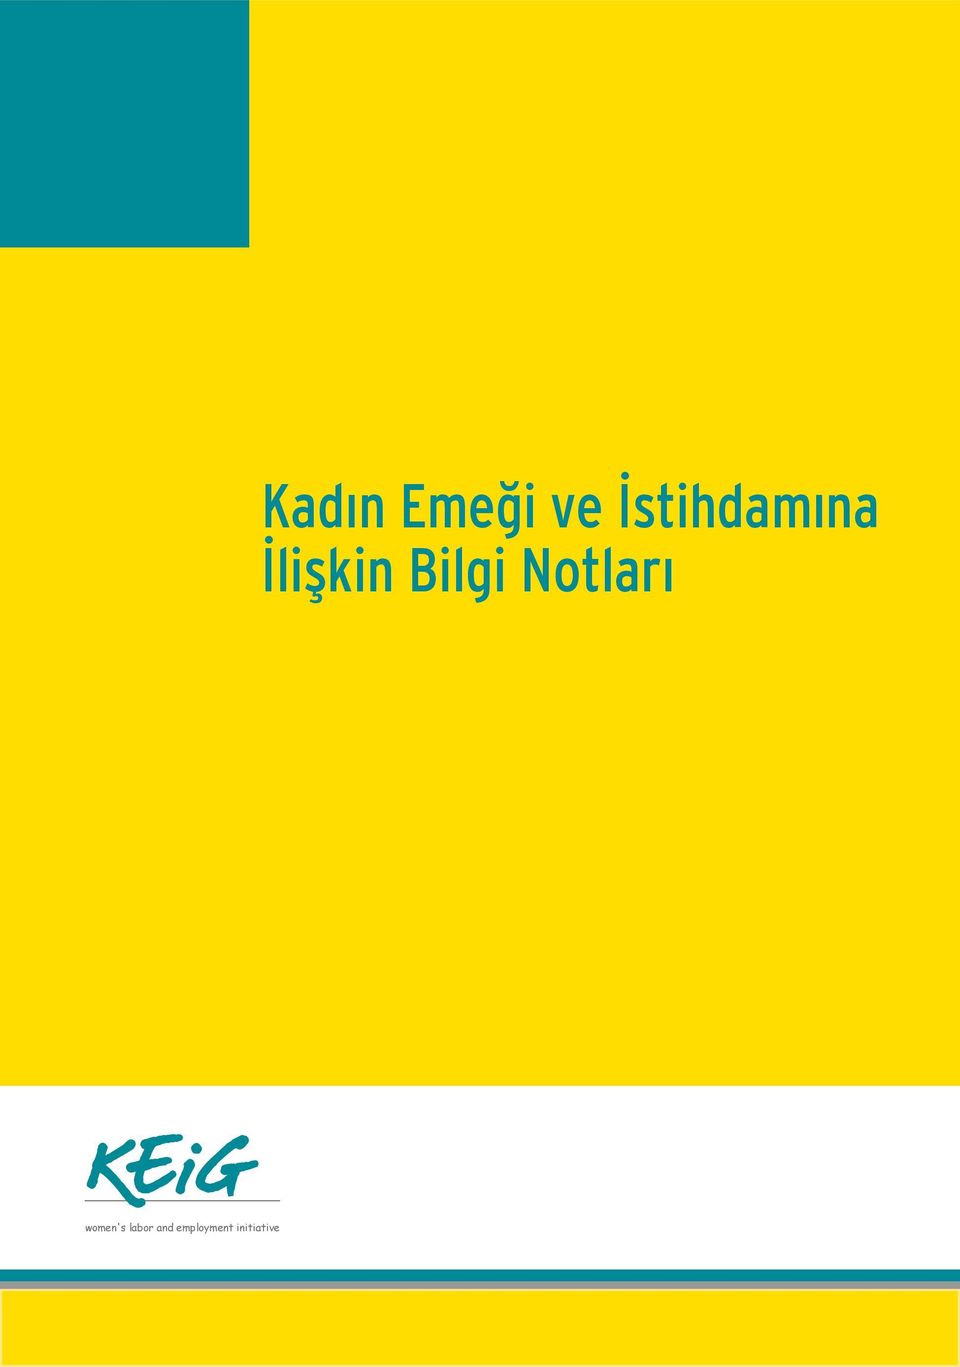 employment initiative Kadın